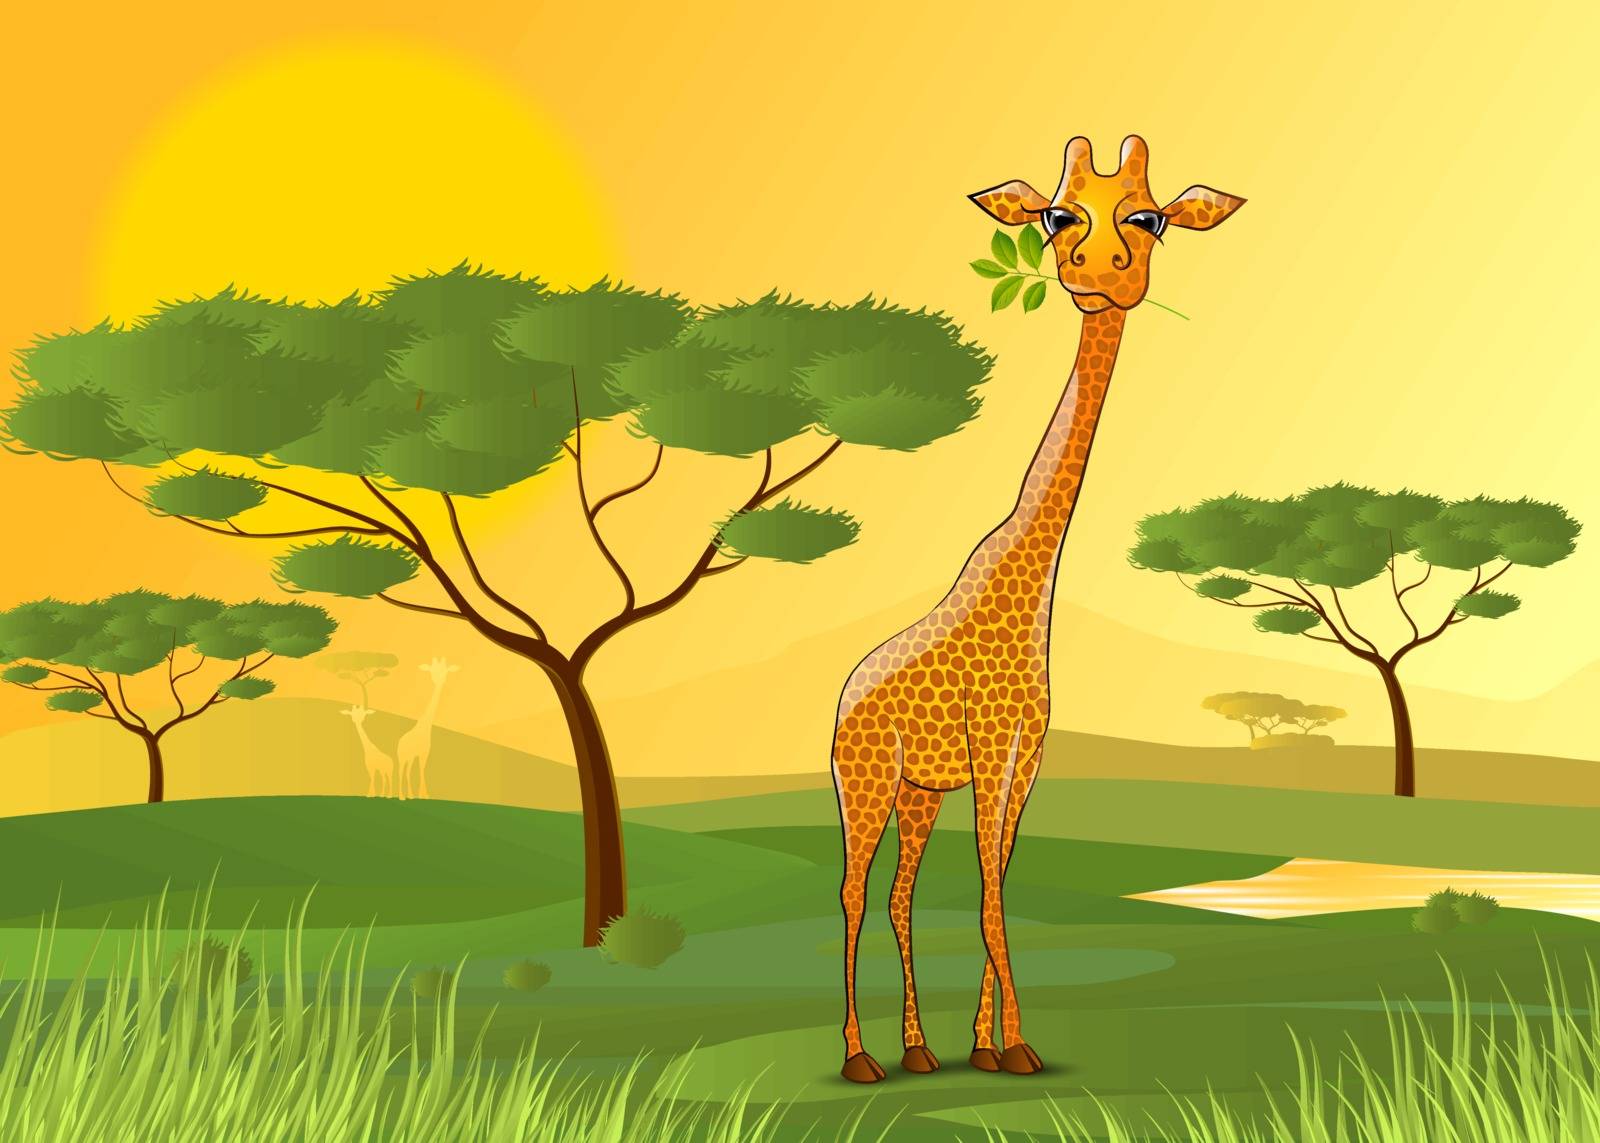 Giraffe eating leaves in Africa at sunset by moleks